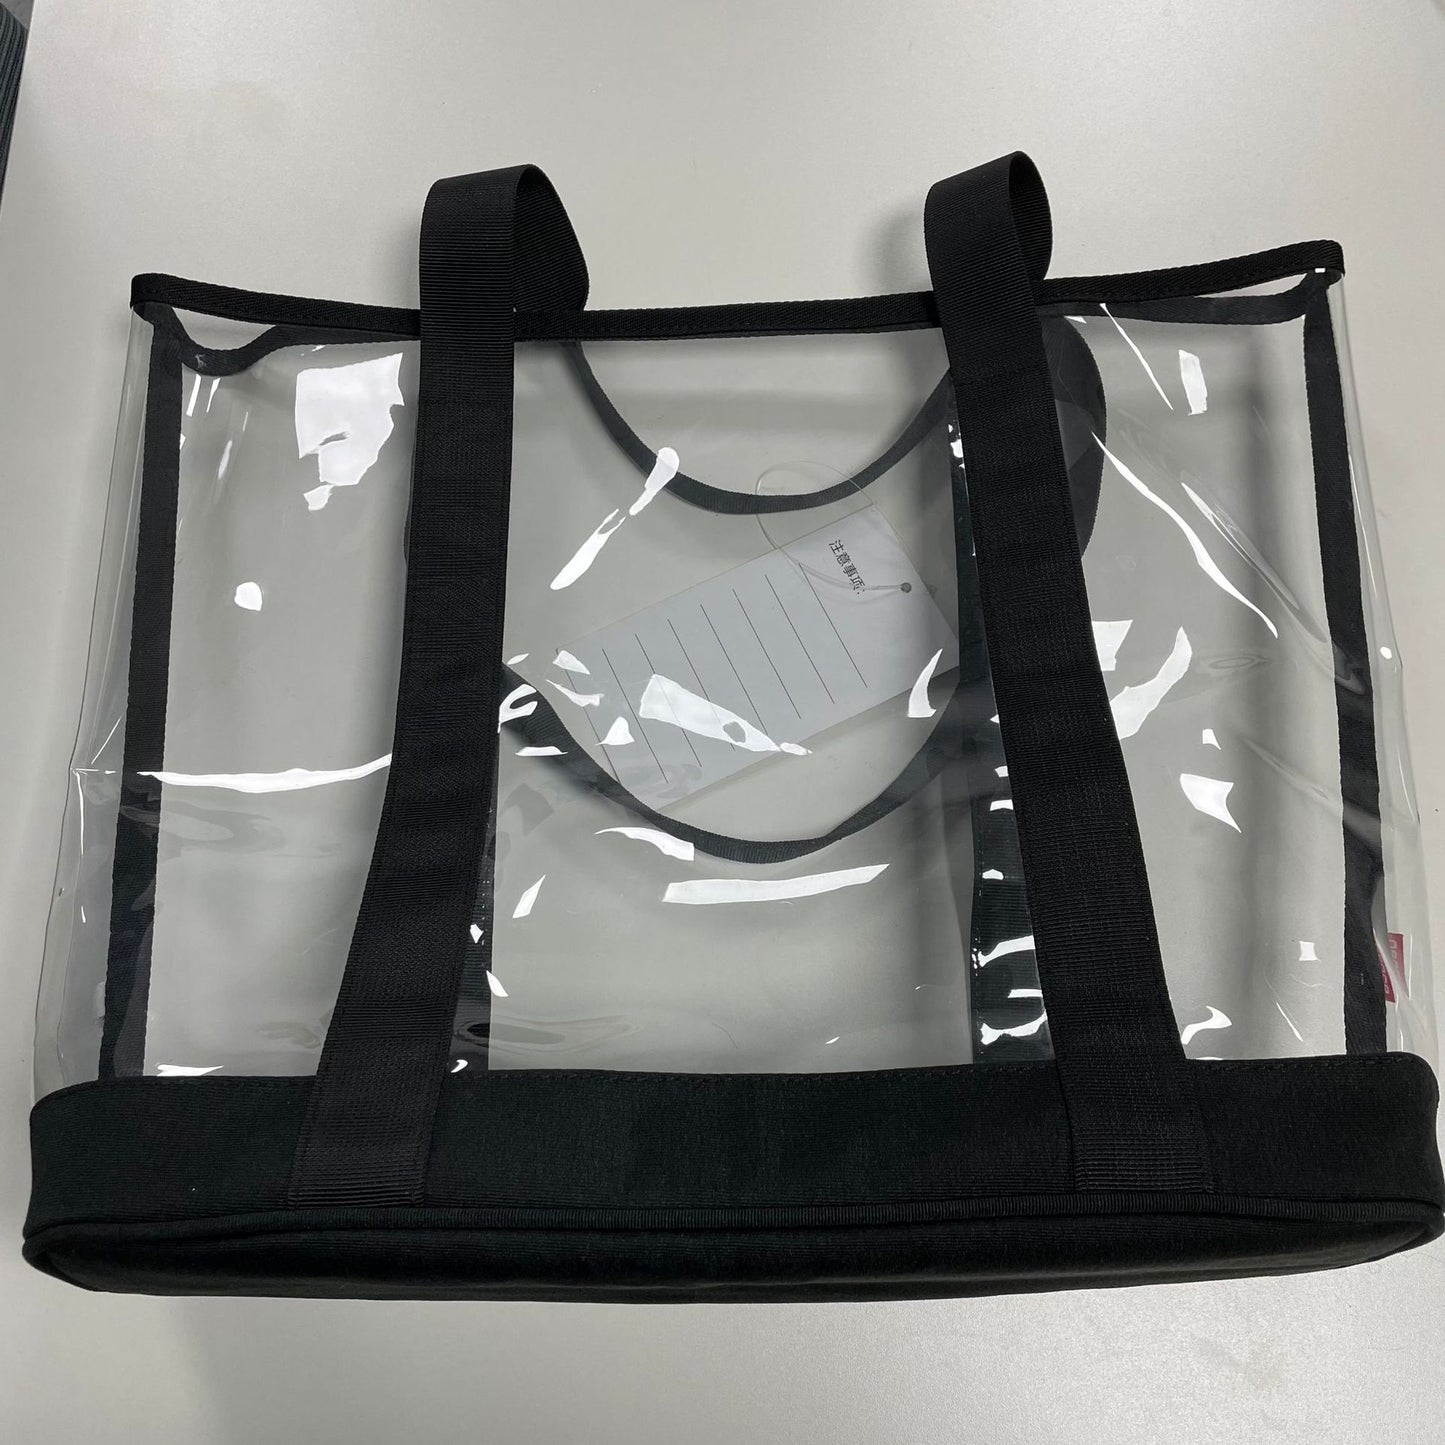 OSOCE B78 Transparent Tote Handbag